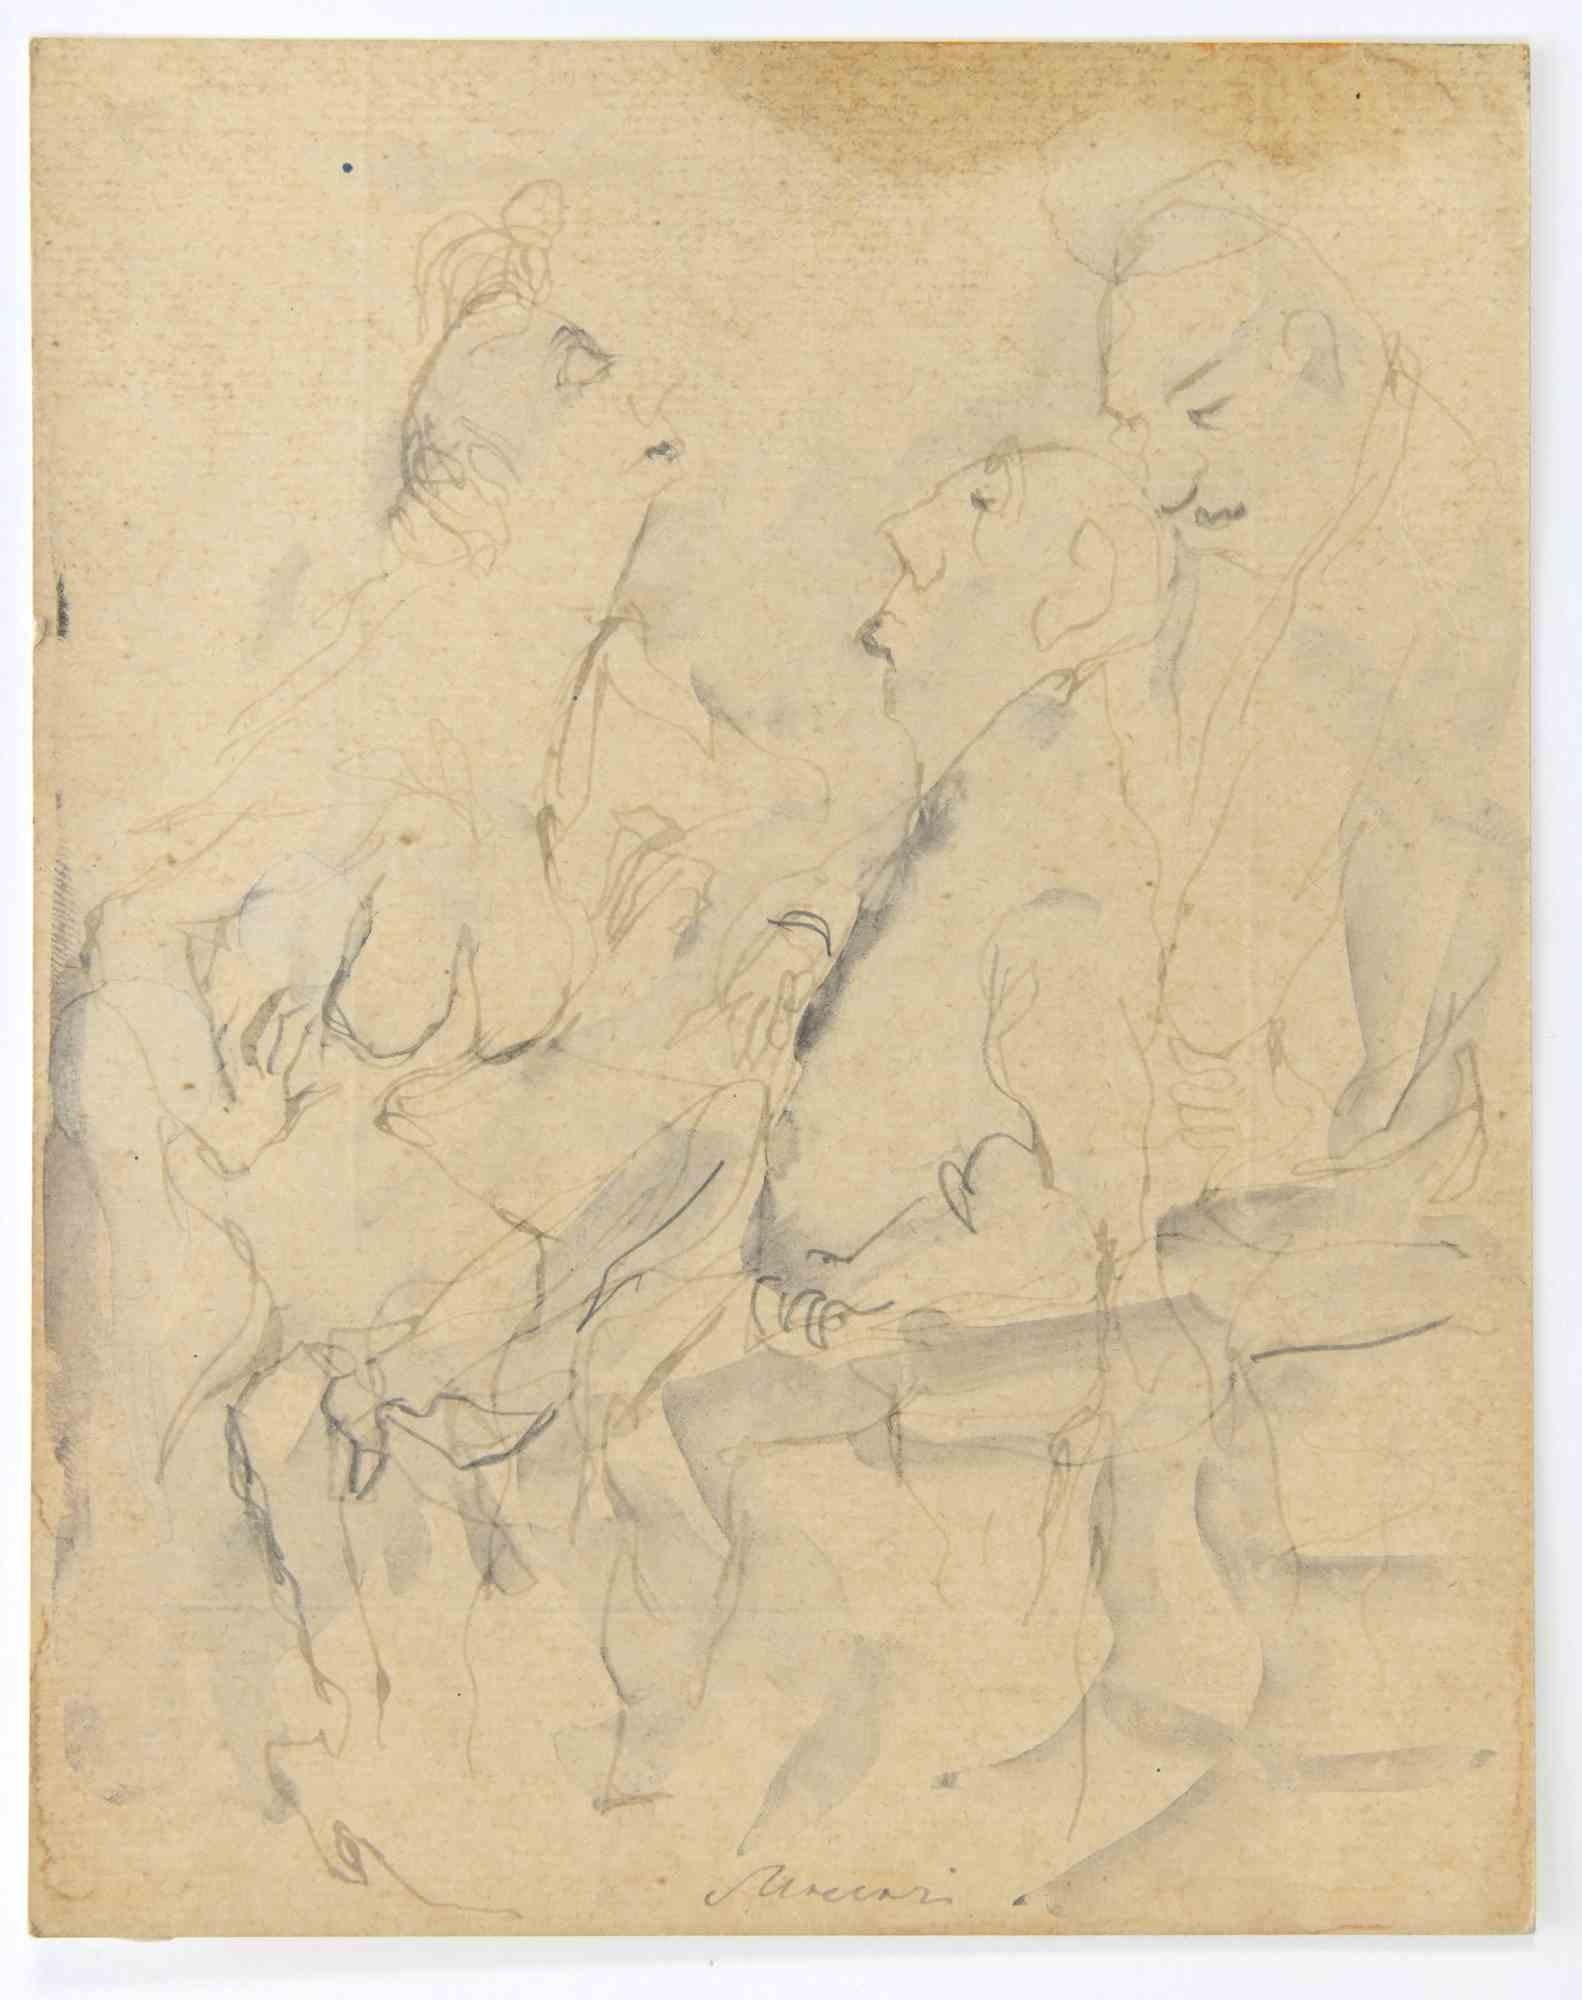 Seductive - Drawing by Mino Maccari - 1940s